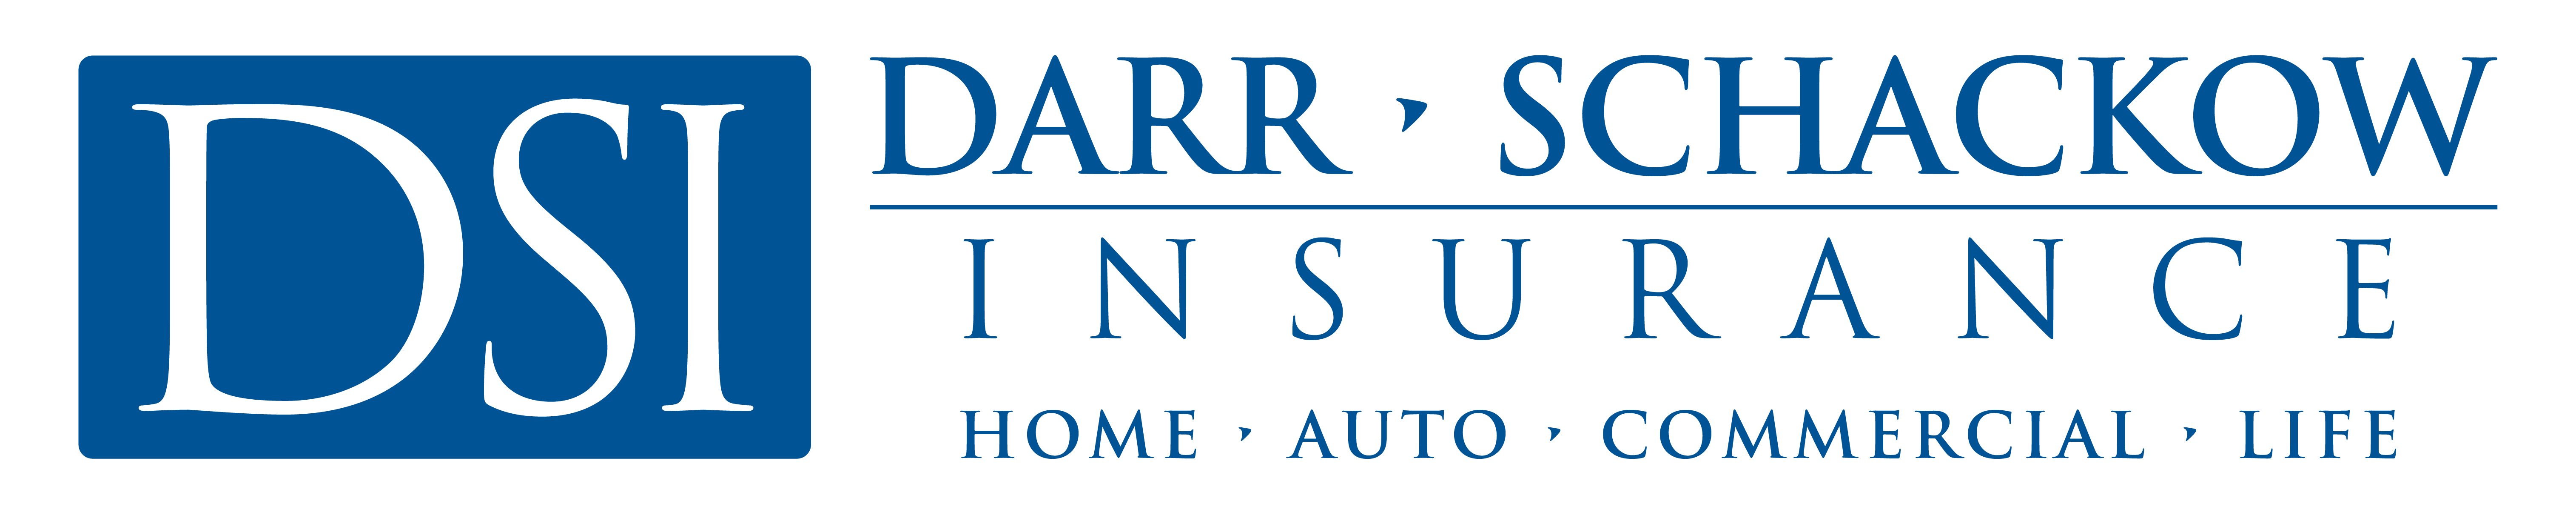 Logo for Darr Schackow Insurance